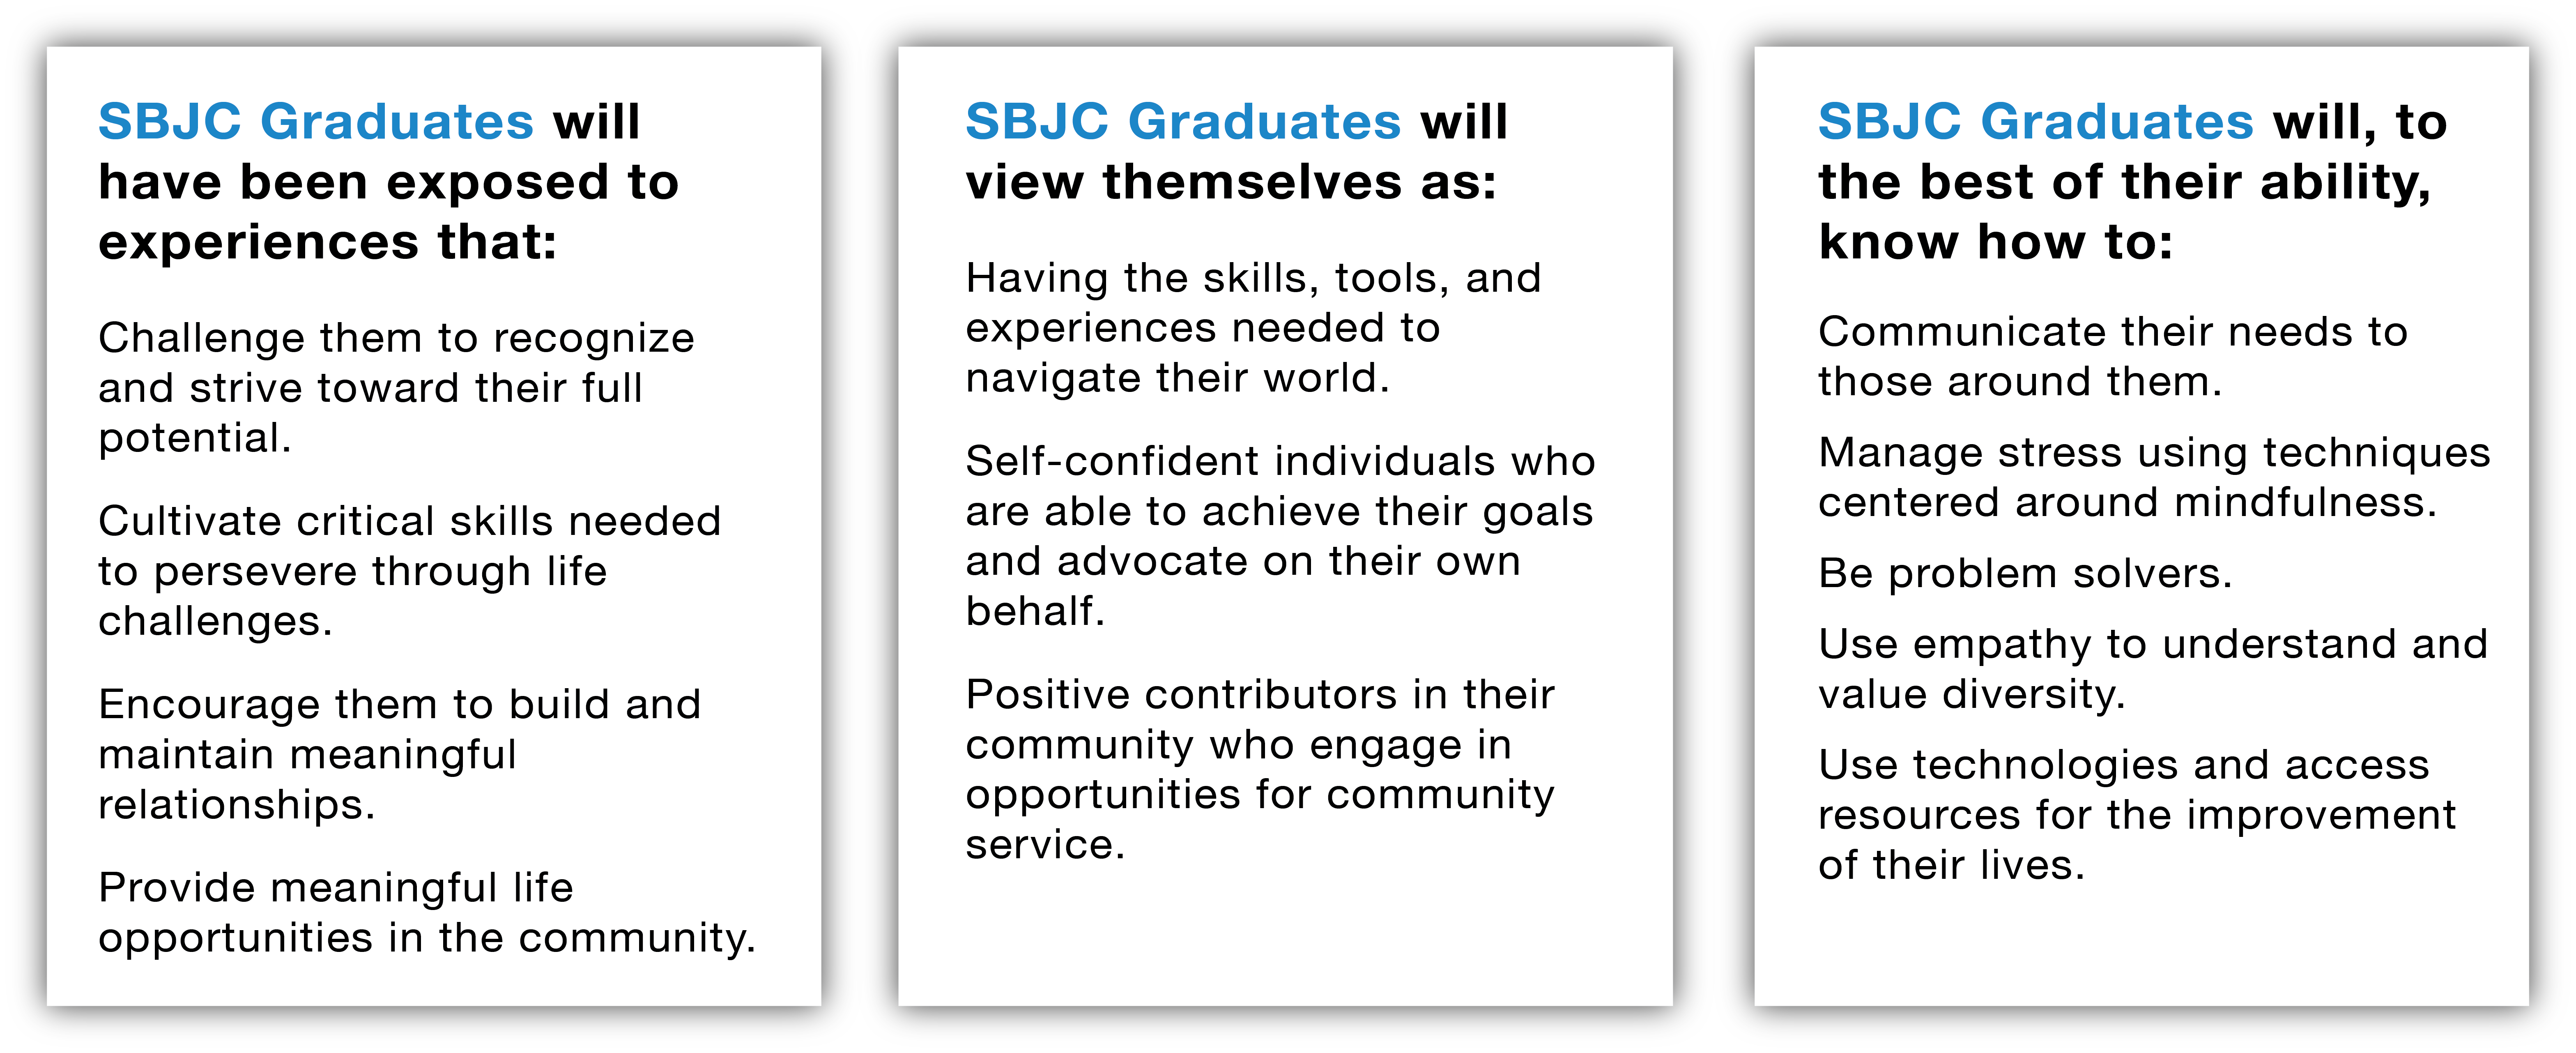 SBJC's profile of a graduate